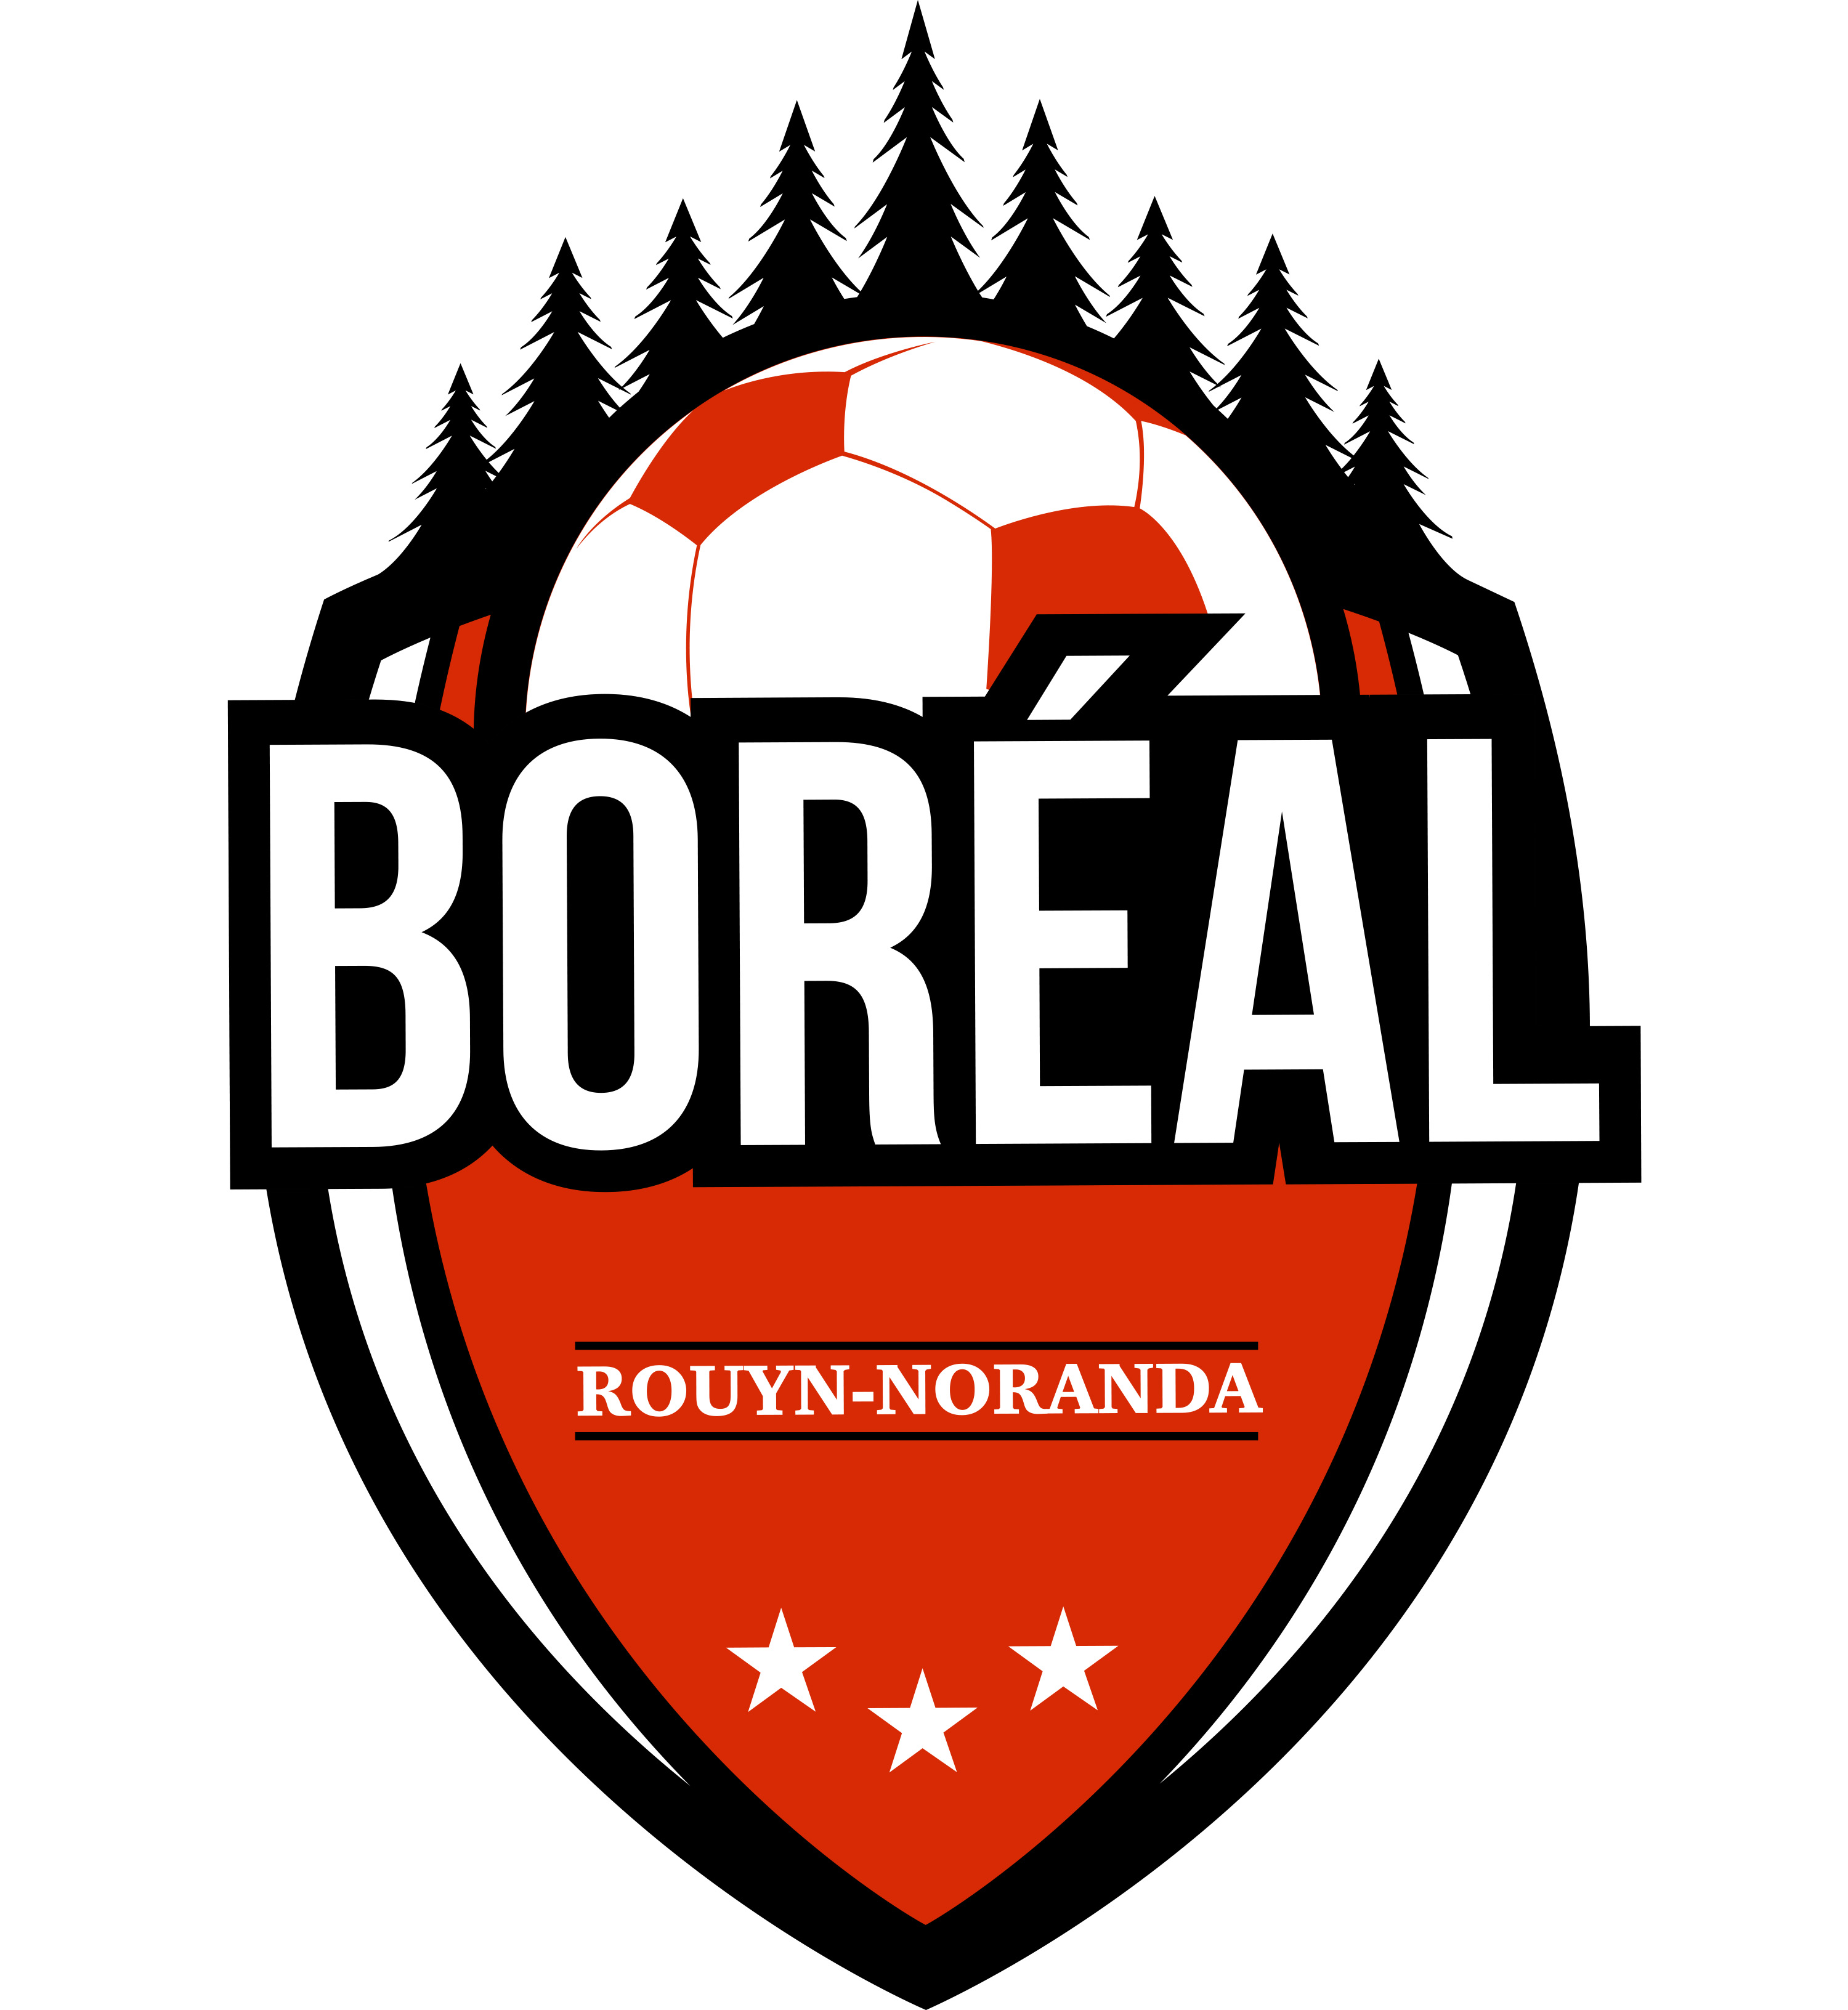 BORÉAL ROUYN-NORANDA